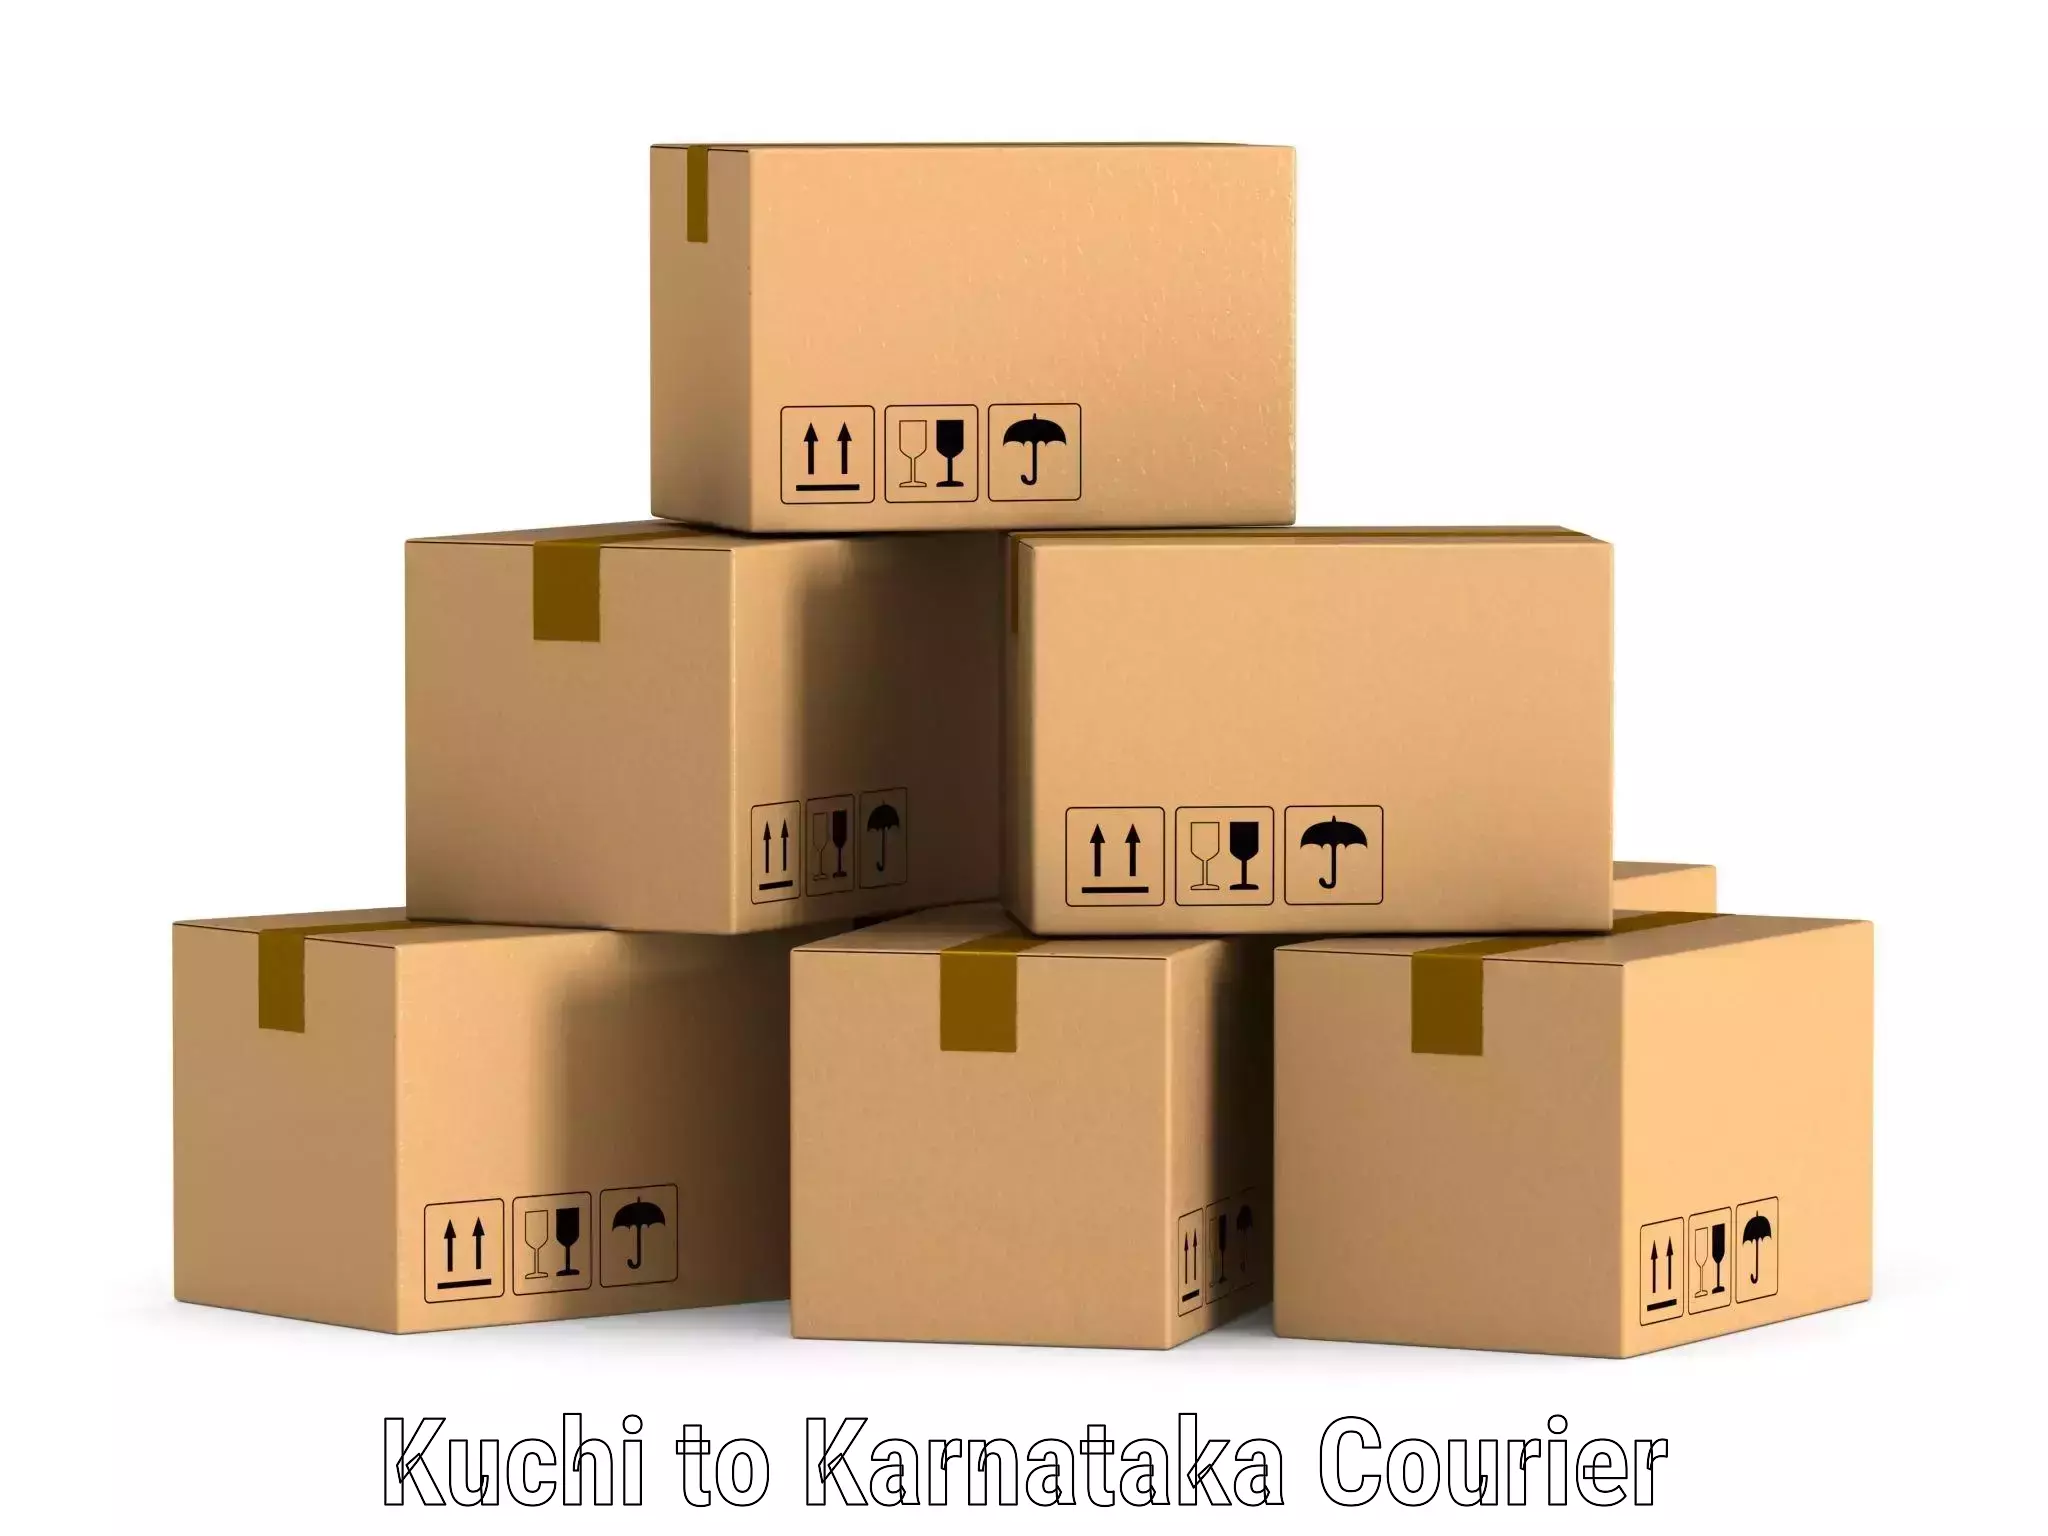 Courier service partnerships in Kuchi to Karnataka